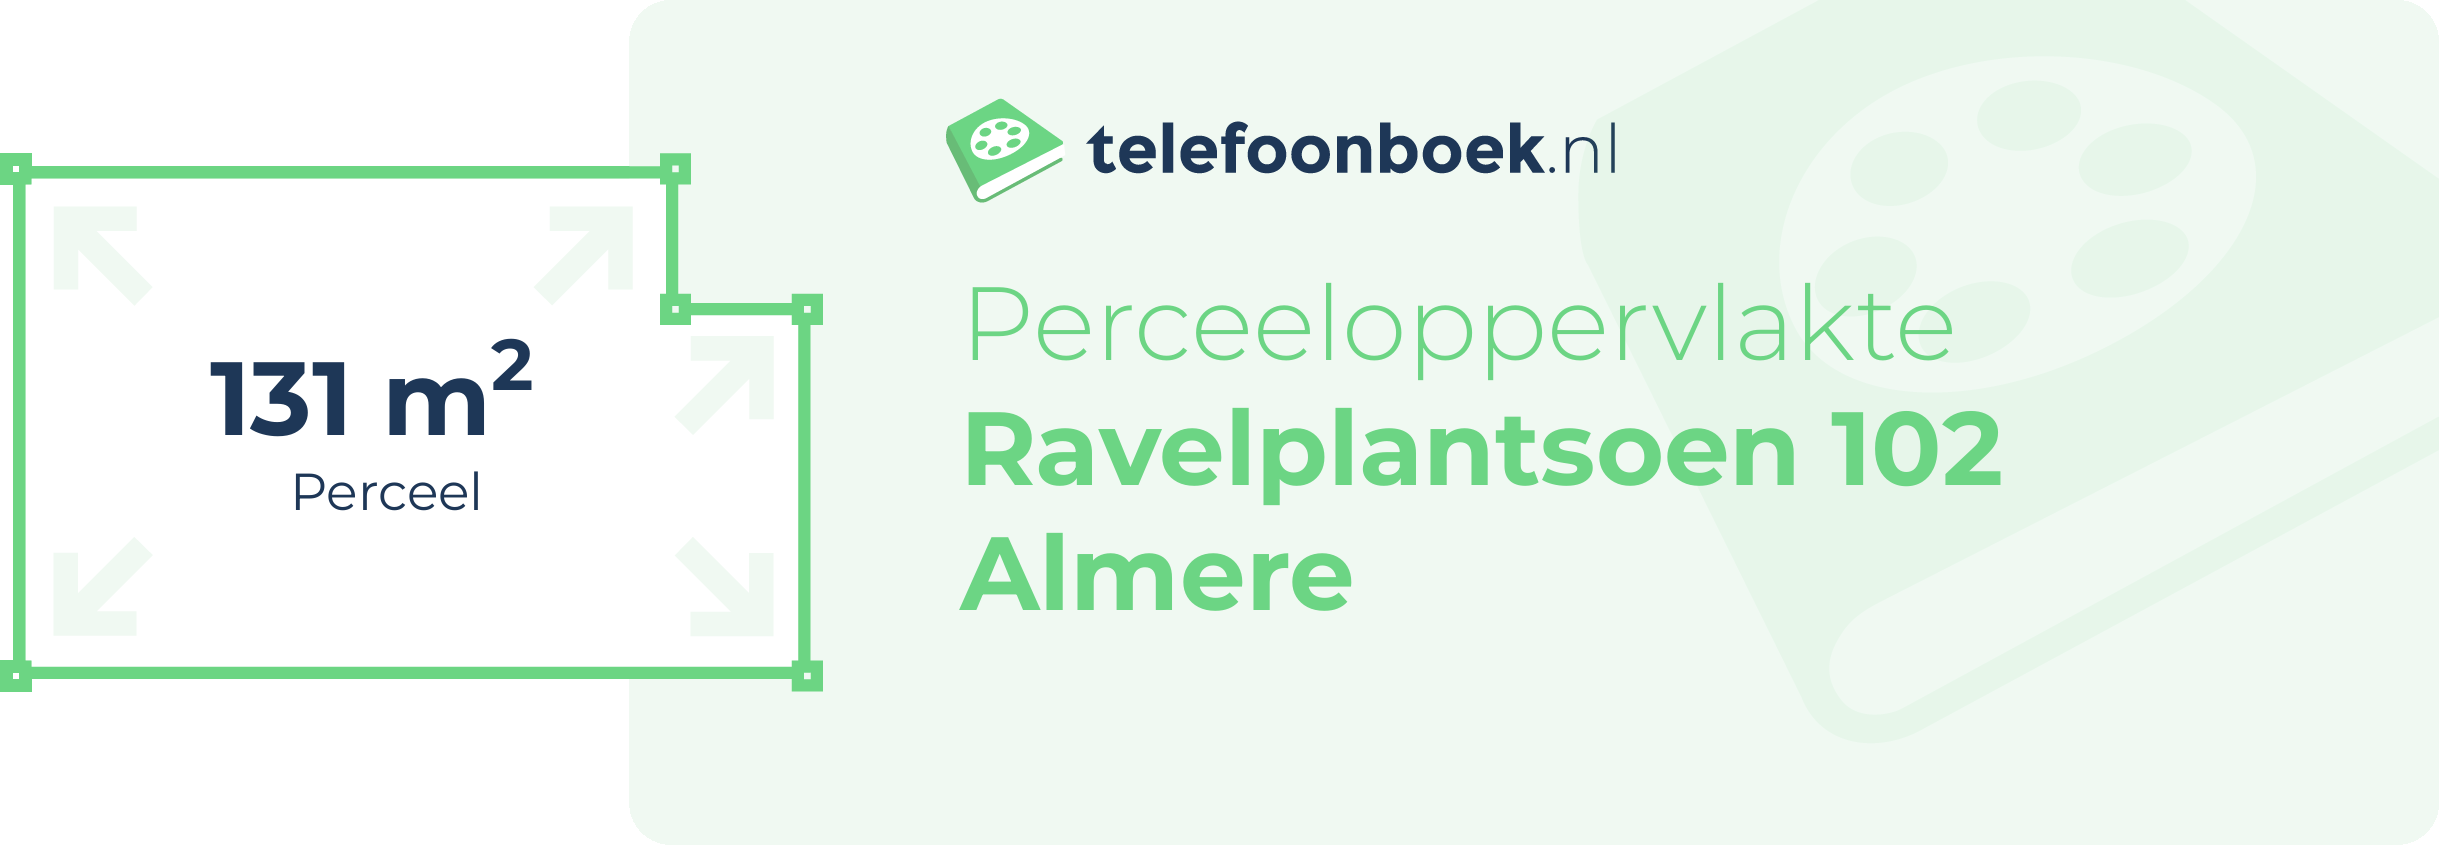 Perceeloppervlakte Ravelplantsoen 102 Almere